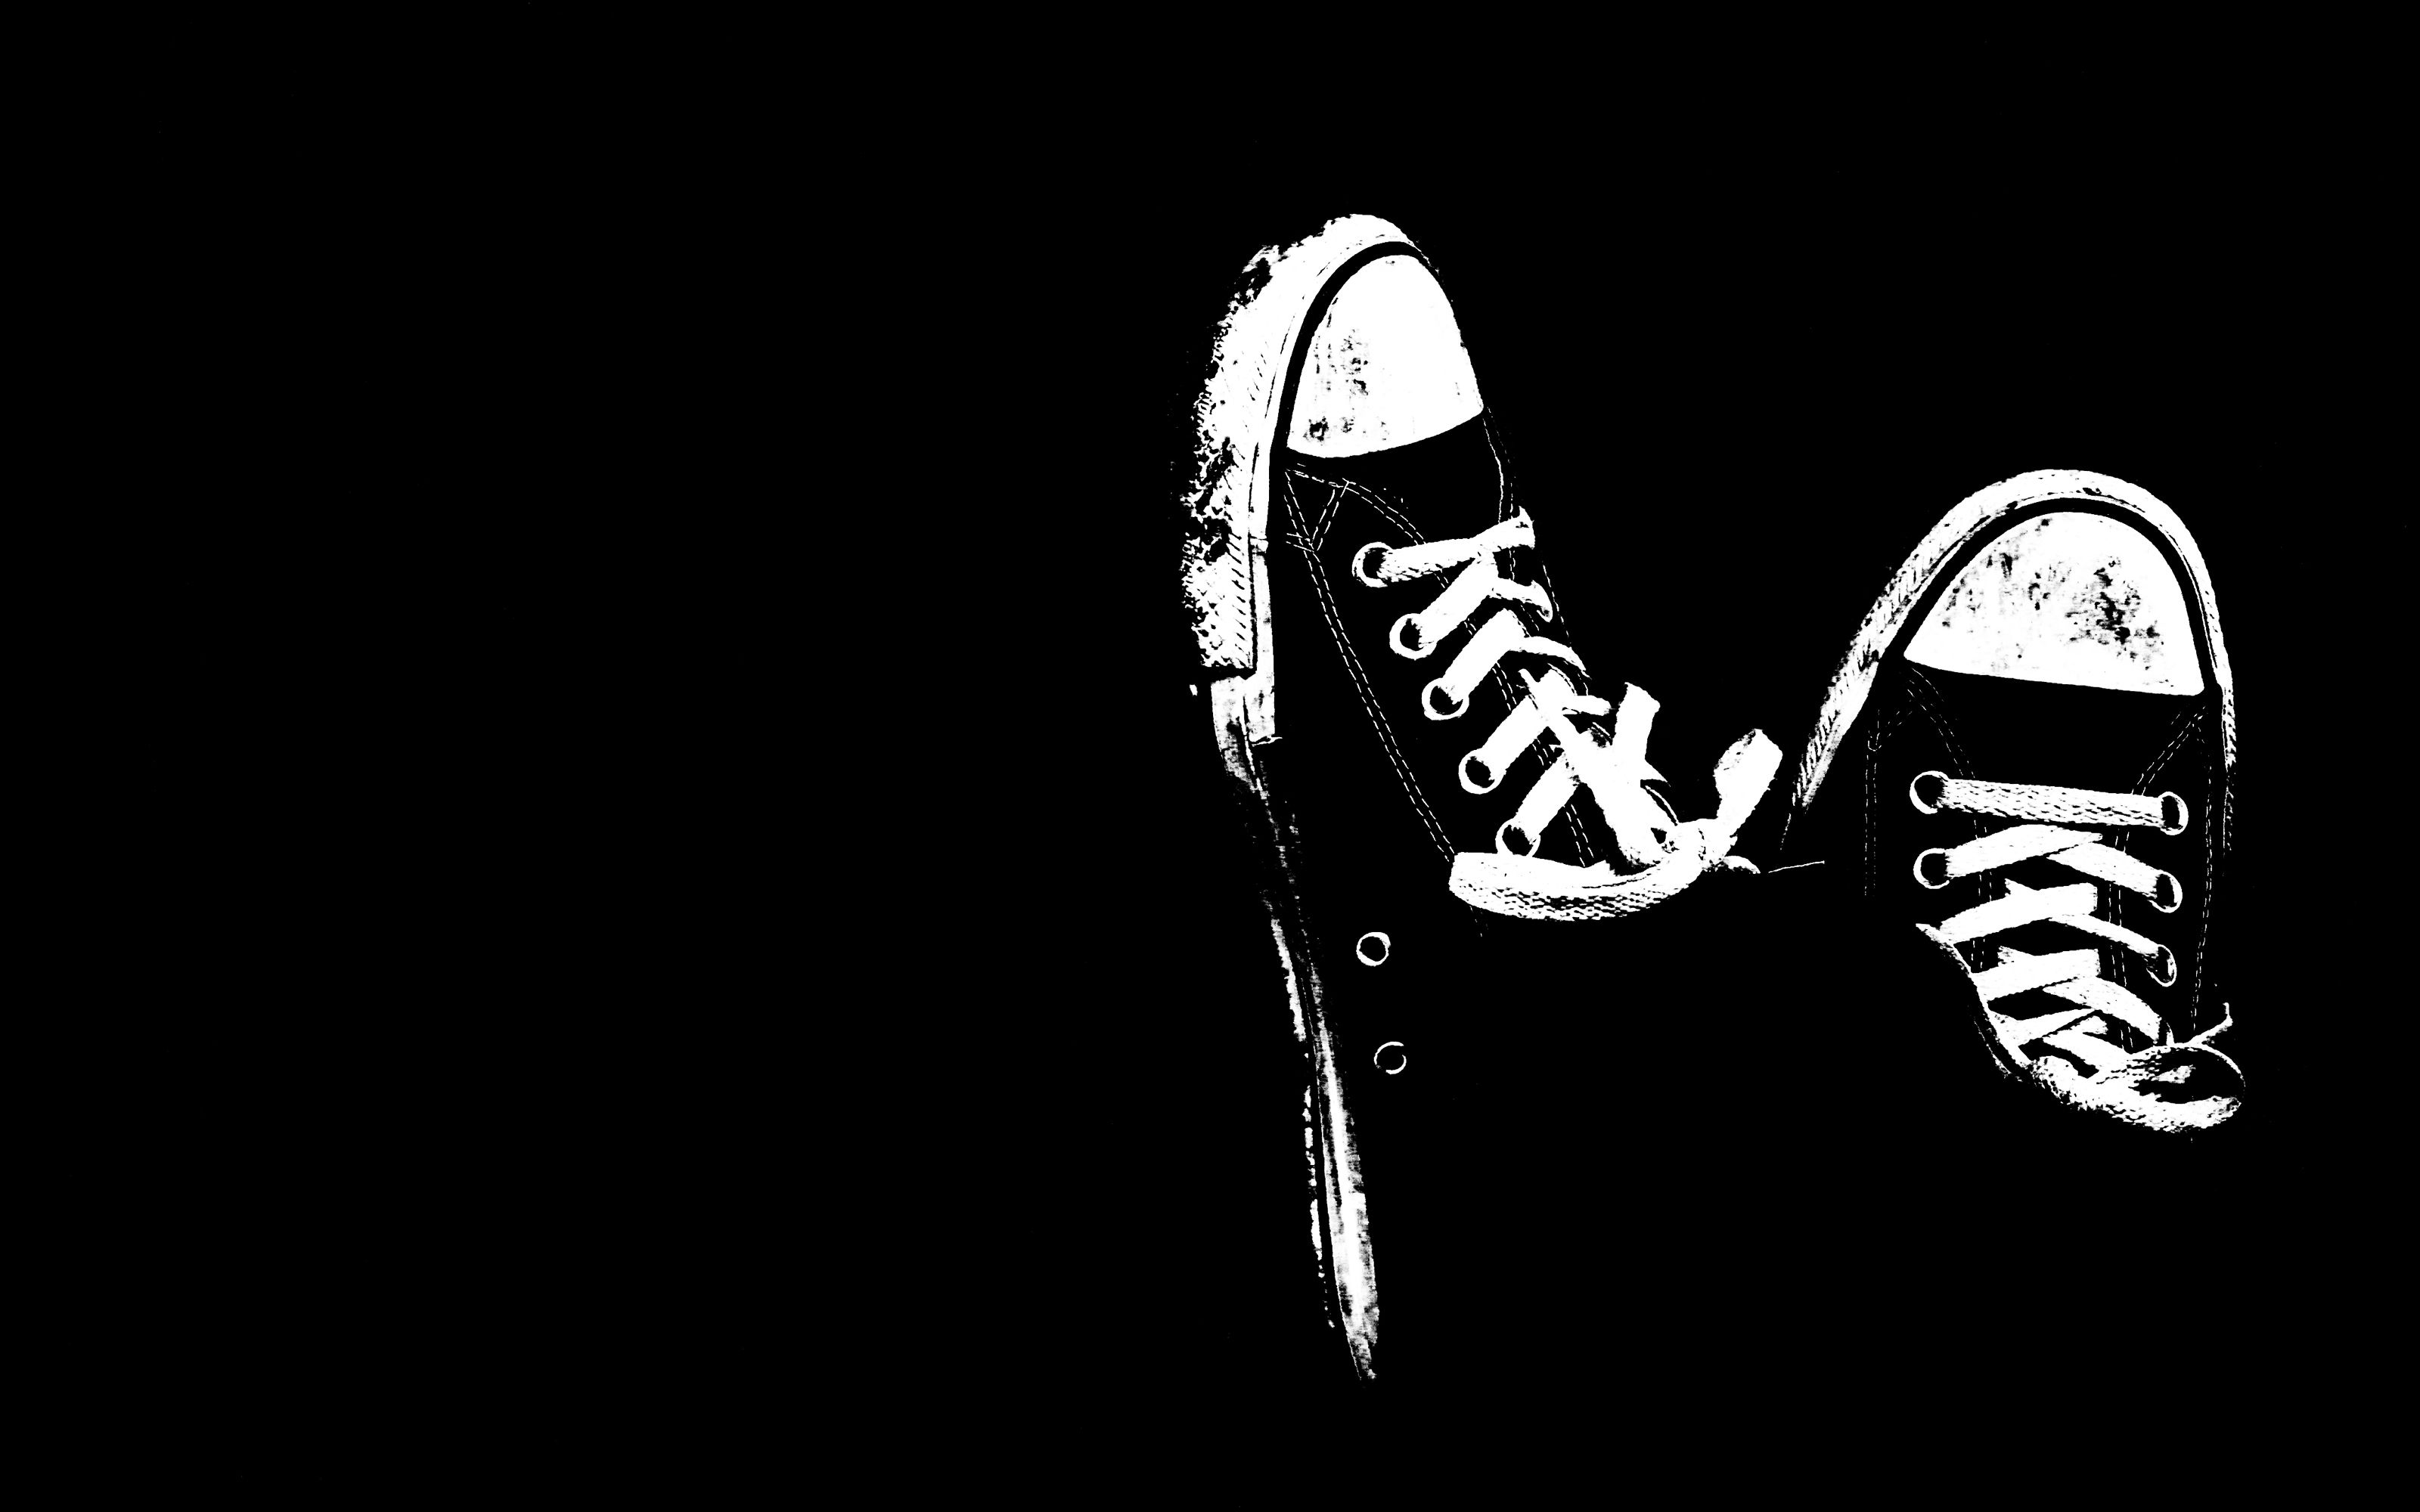 carta da parati nera,calzature,nero,bianca,scarpa,bianco e nero